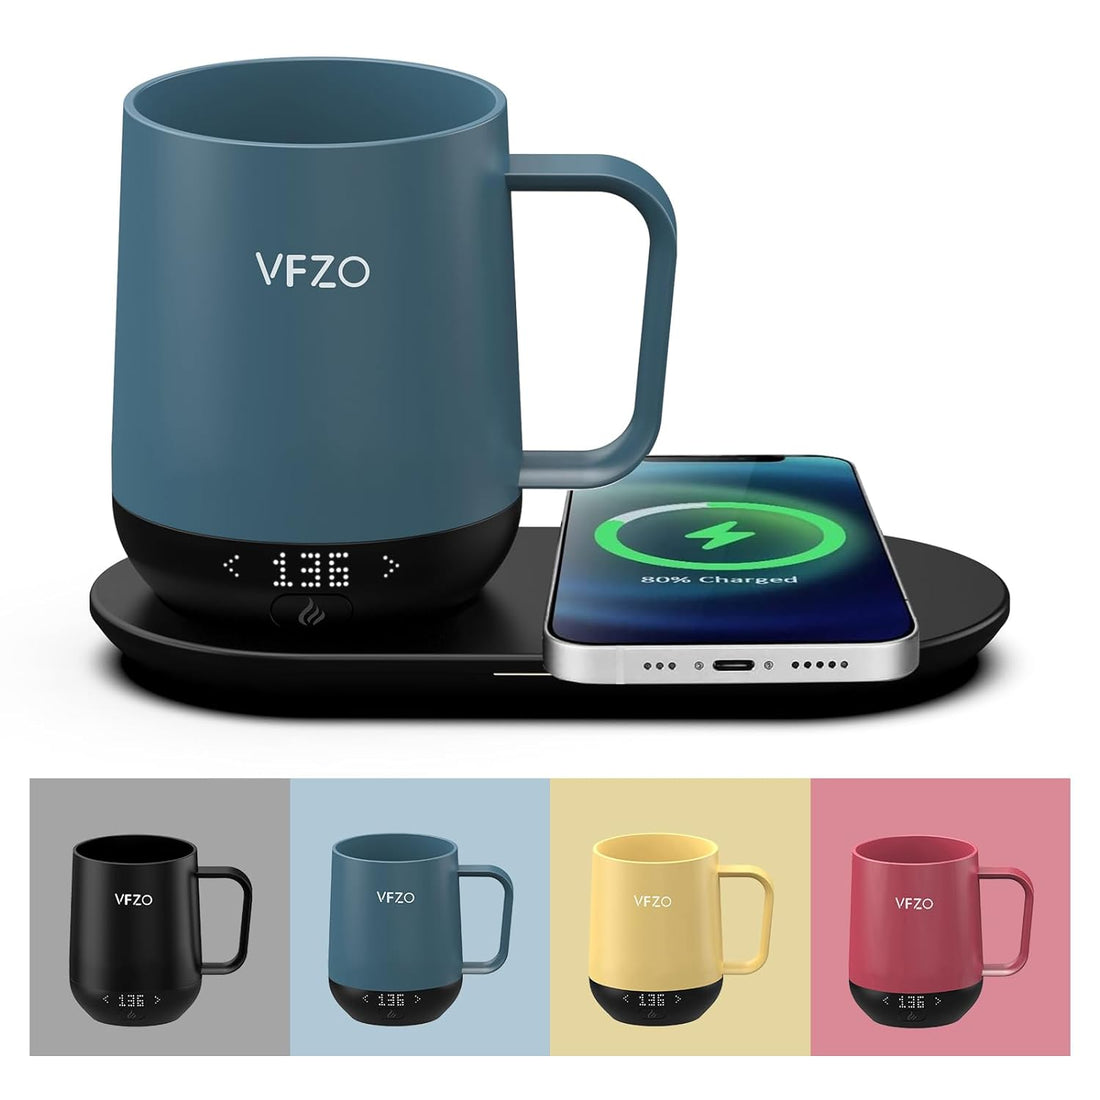 VFZO Temperature Control Smart Mug, Self Heating Coffee Mug LED Display, 180 Min Battery Life - Hot up to 149℉ Fast Wireless Charger Base Improved Design (12oz, Slate Blue)